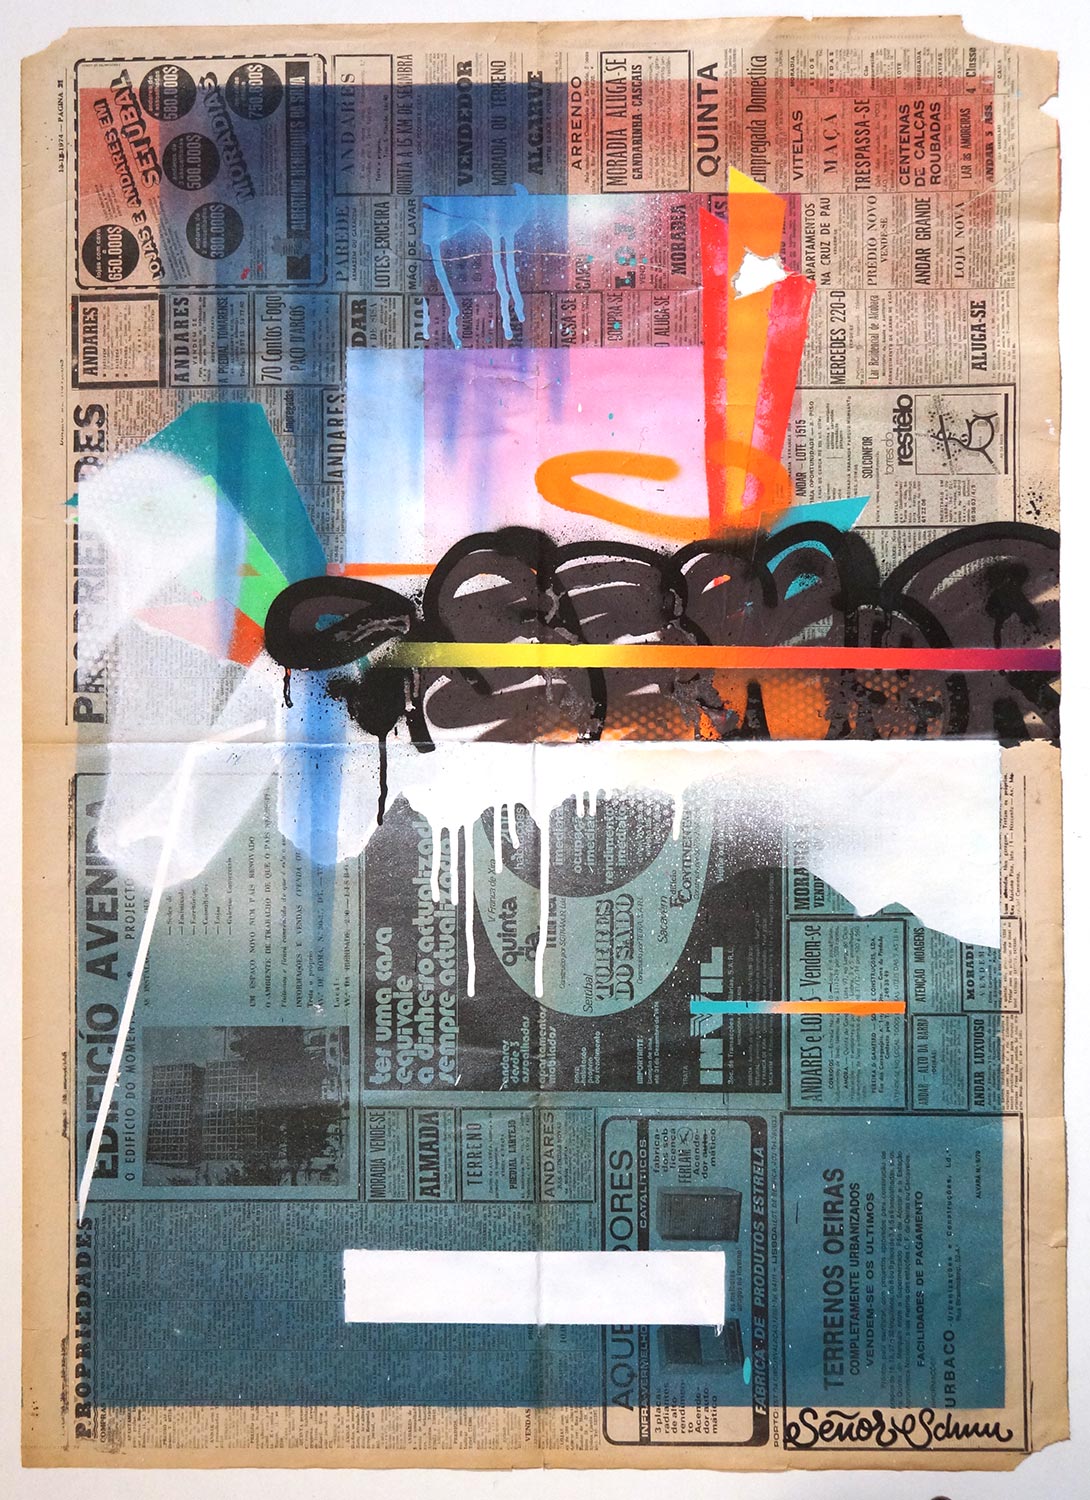 Señor Schnu: "Untitled Abstract Newspaper 1"  - Streetart gallery salzigberlin 